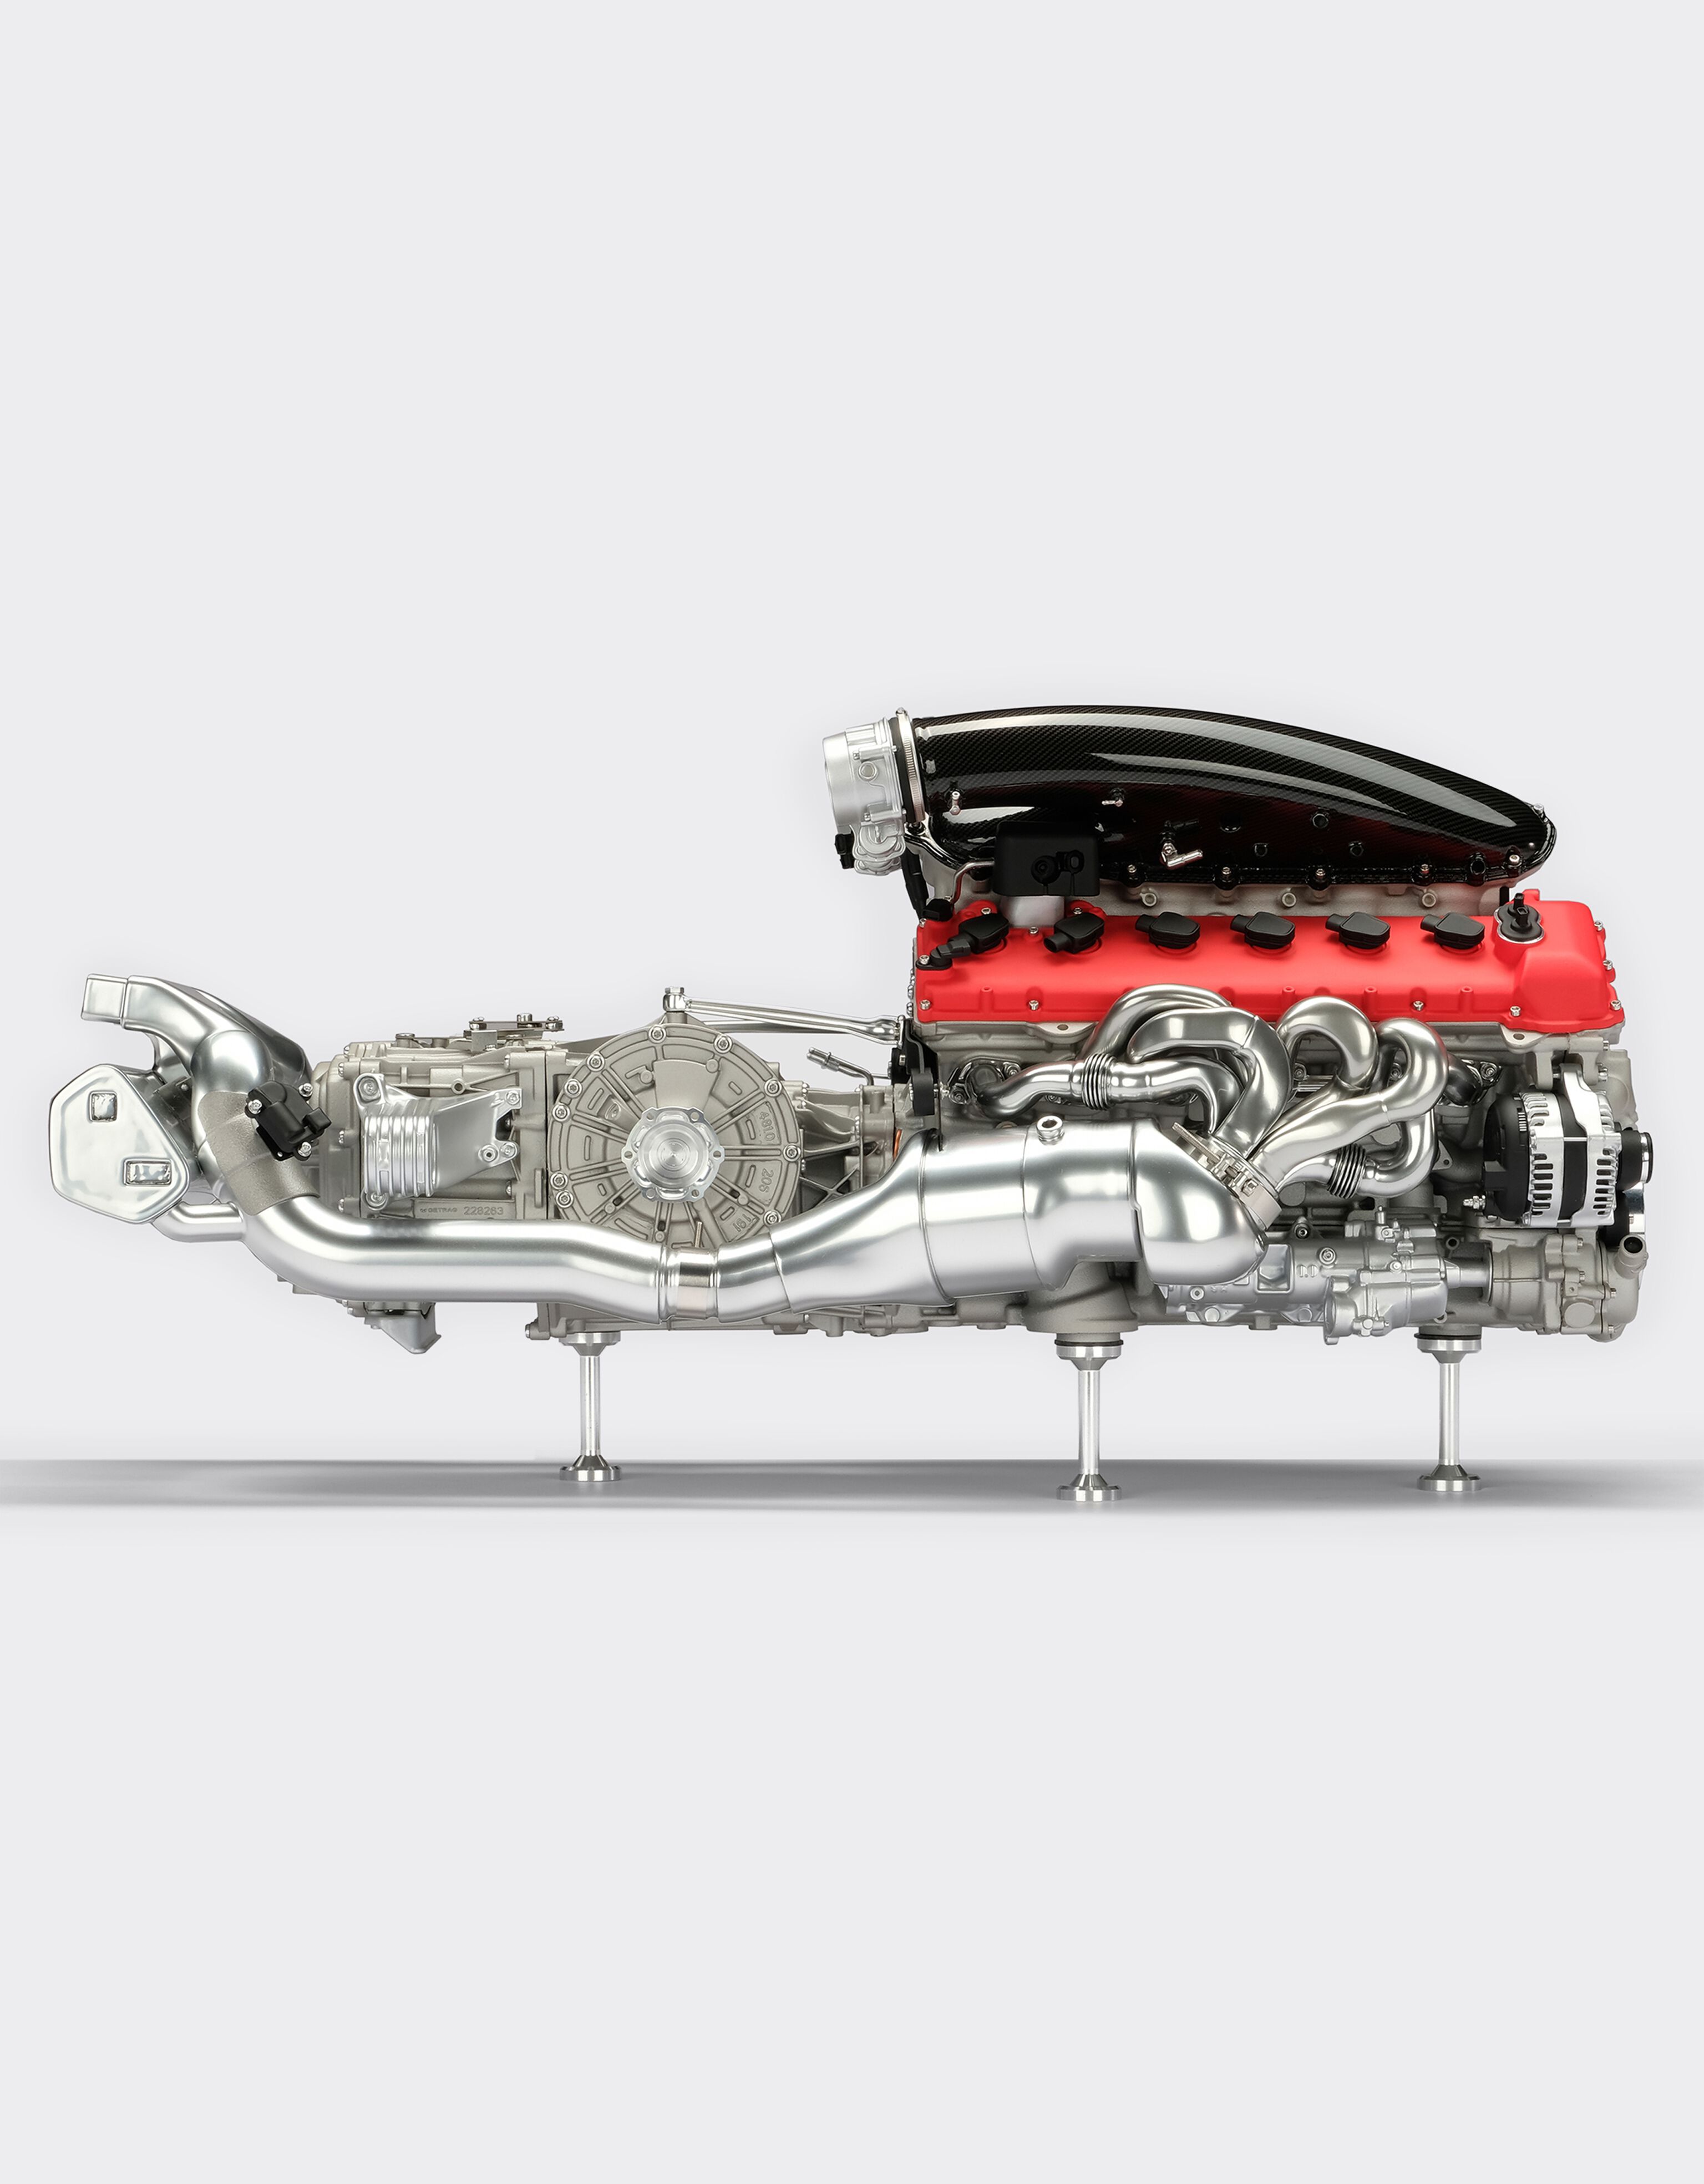 Ferrari Ferrari Daytona SP3 engine model in 1:4 scale 多色 F0885f